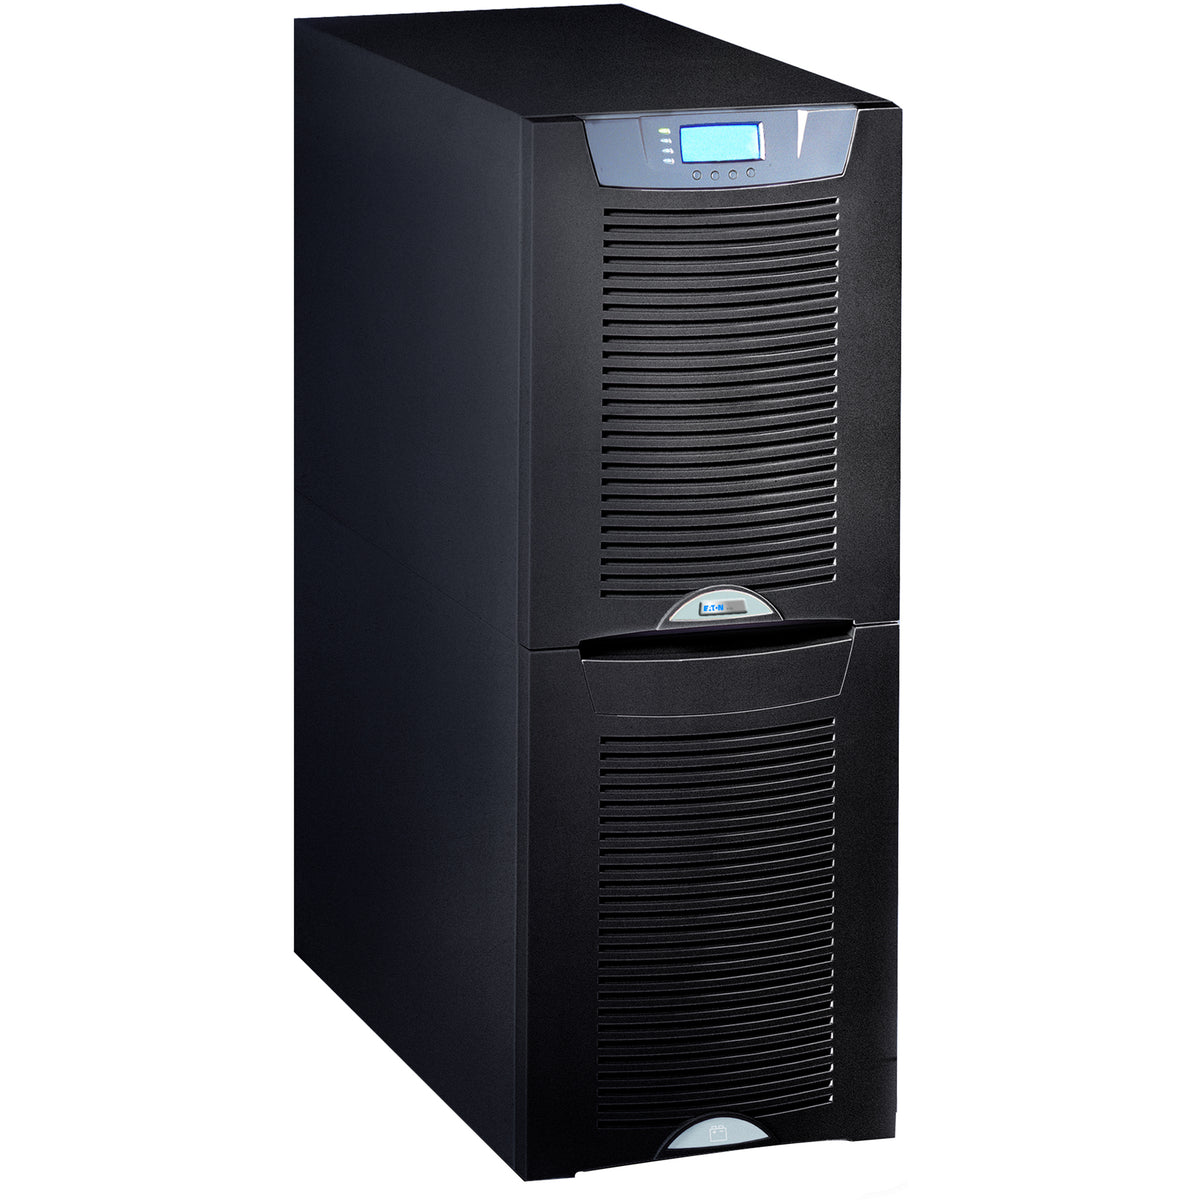 Eaton 9155 UPS Backup Power System - K41211030000000